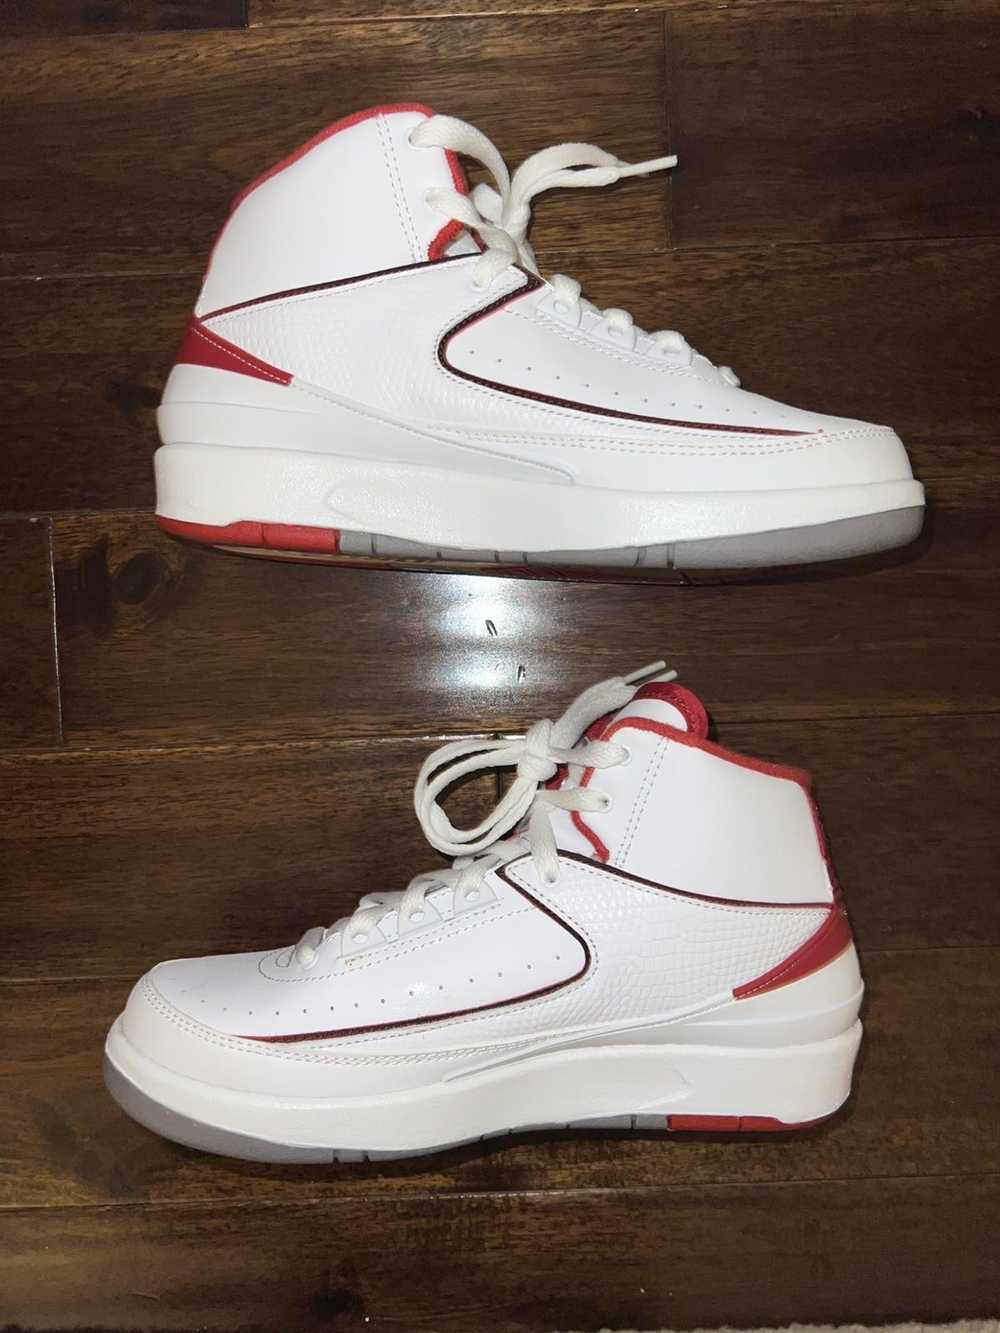 Jordan Brand × Nike Jordan 2 Chicago - image 1